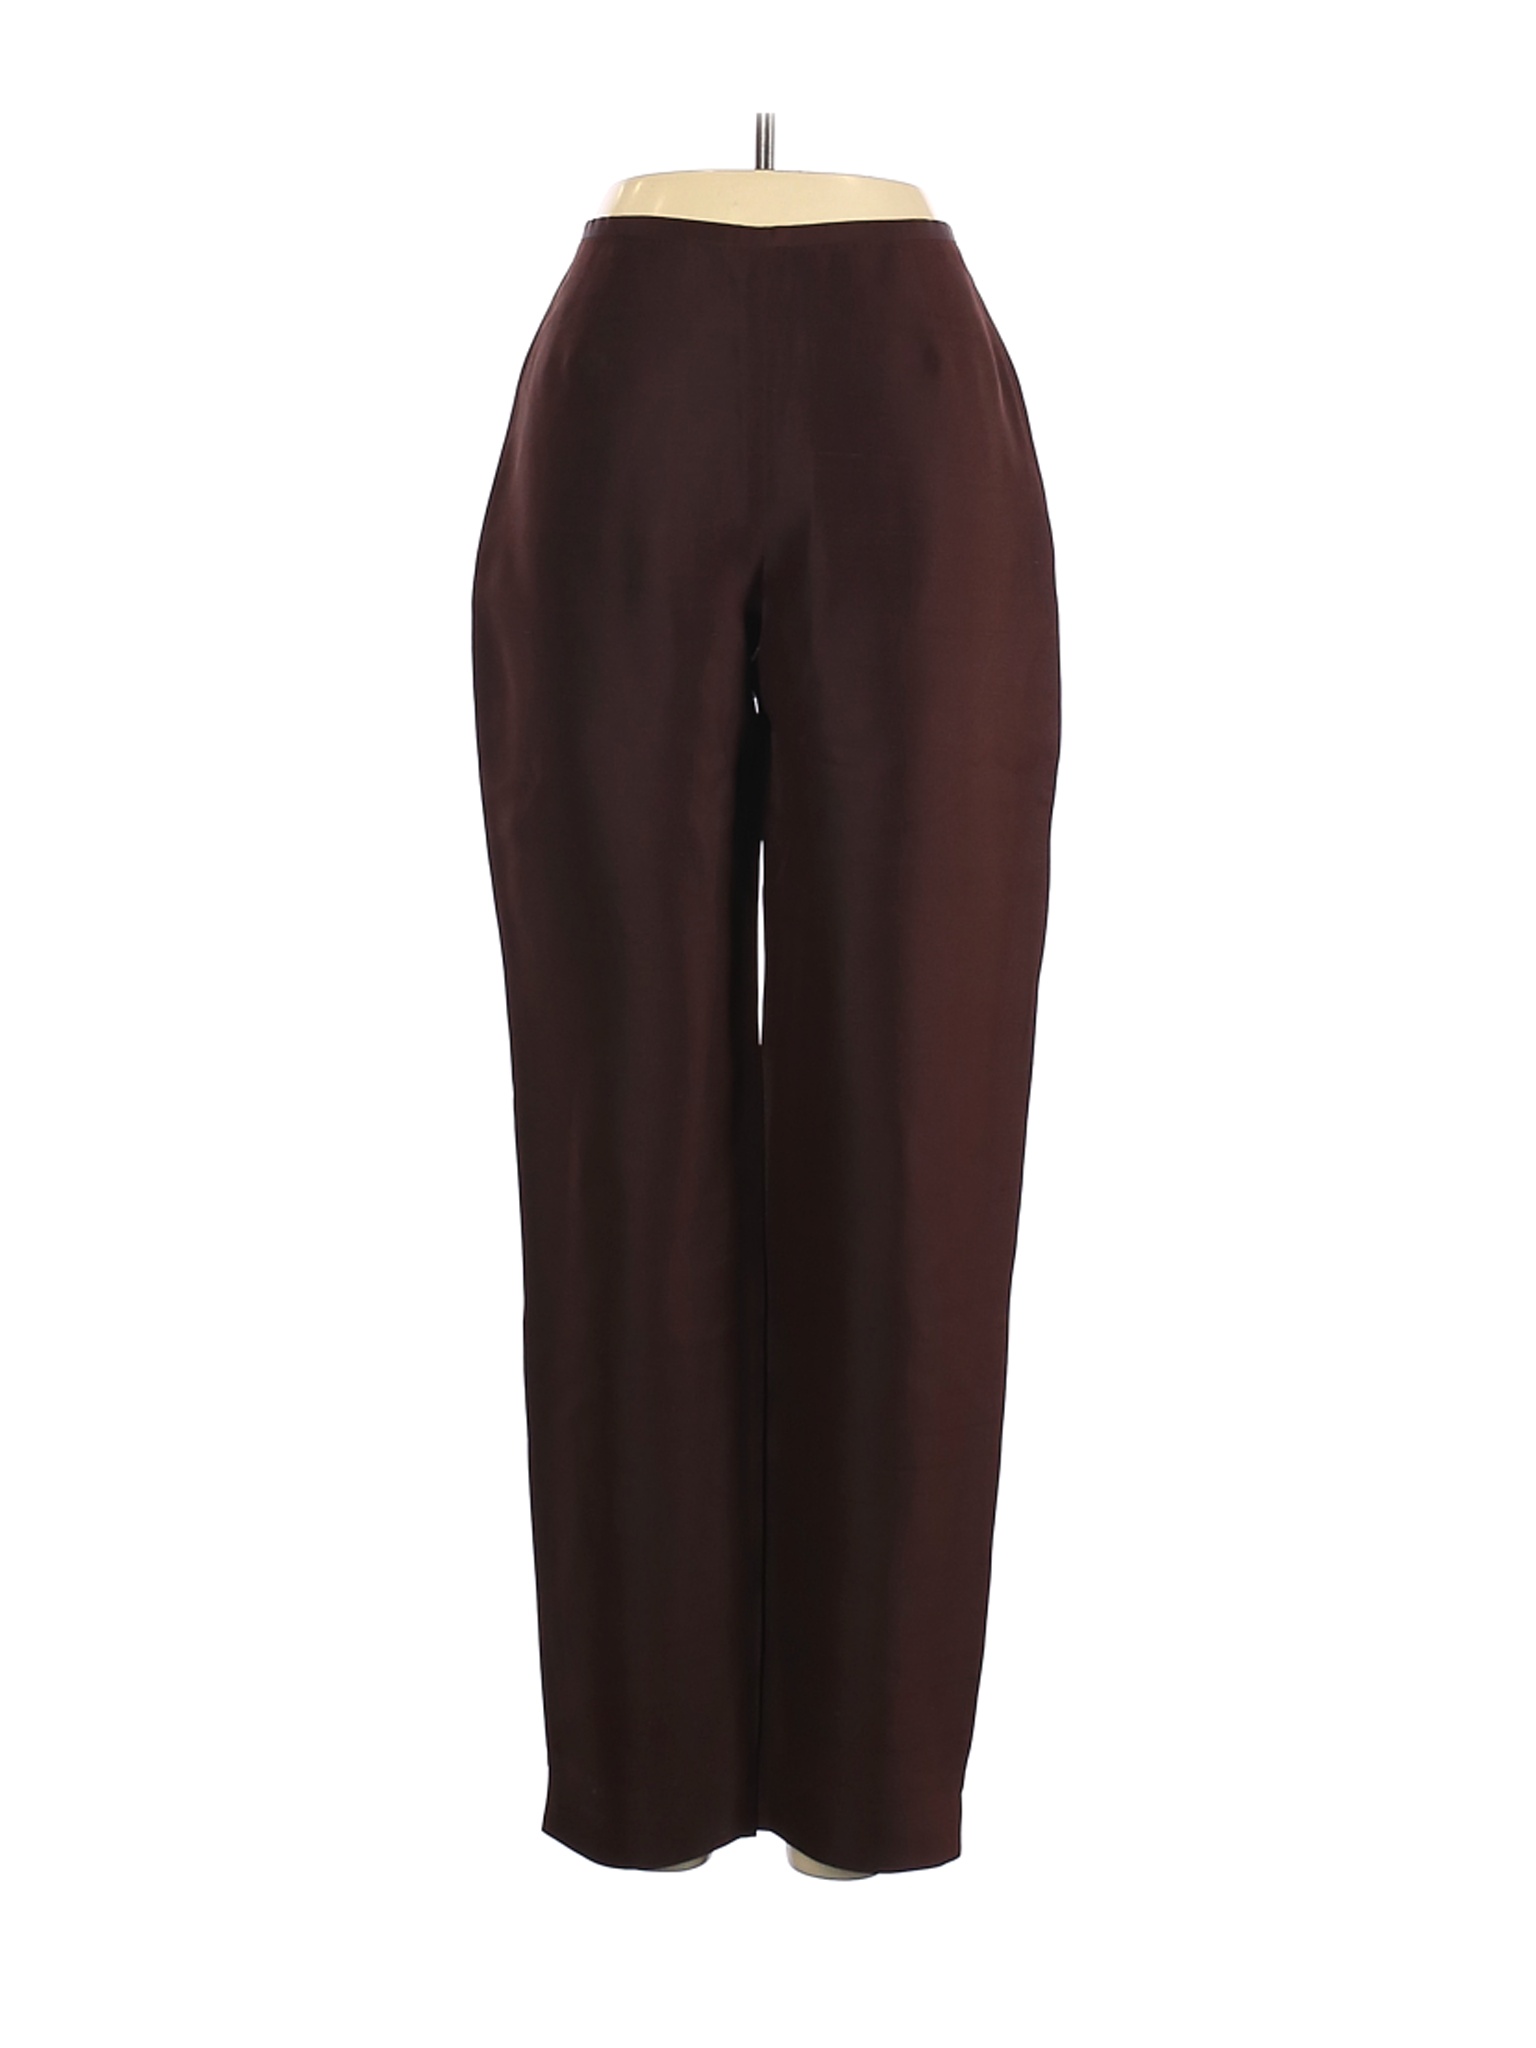 Assorted Brands Women Brown Silk Pants 1 | eBay